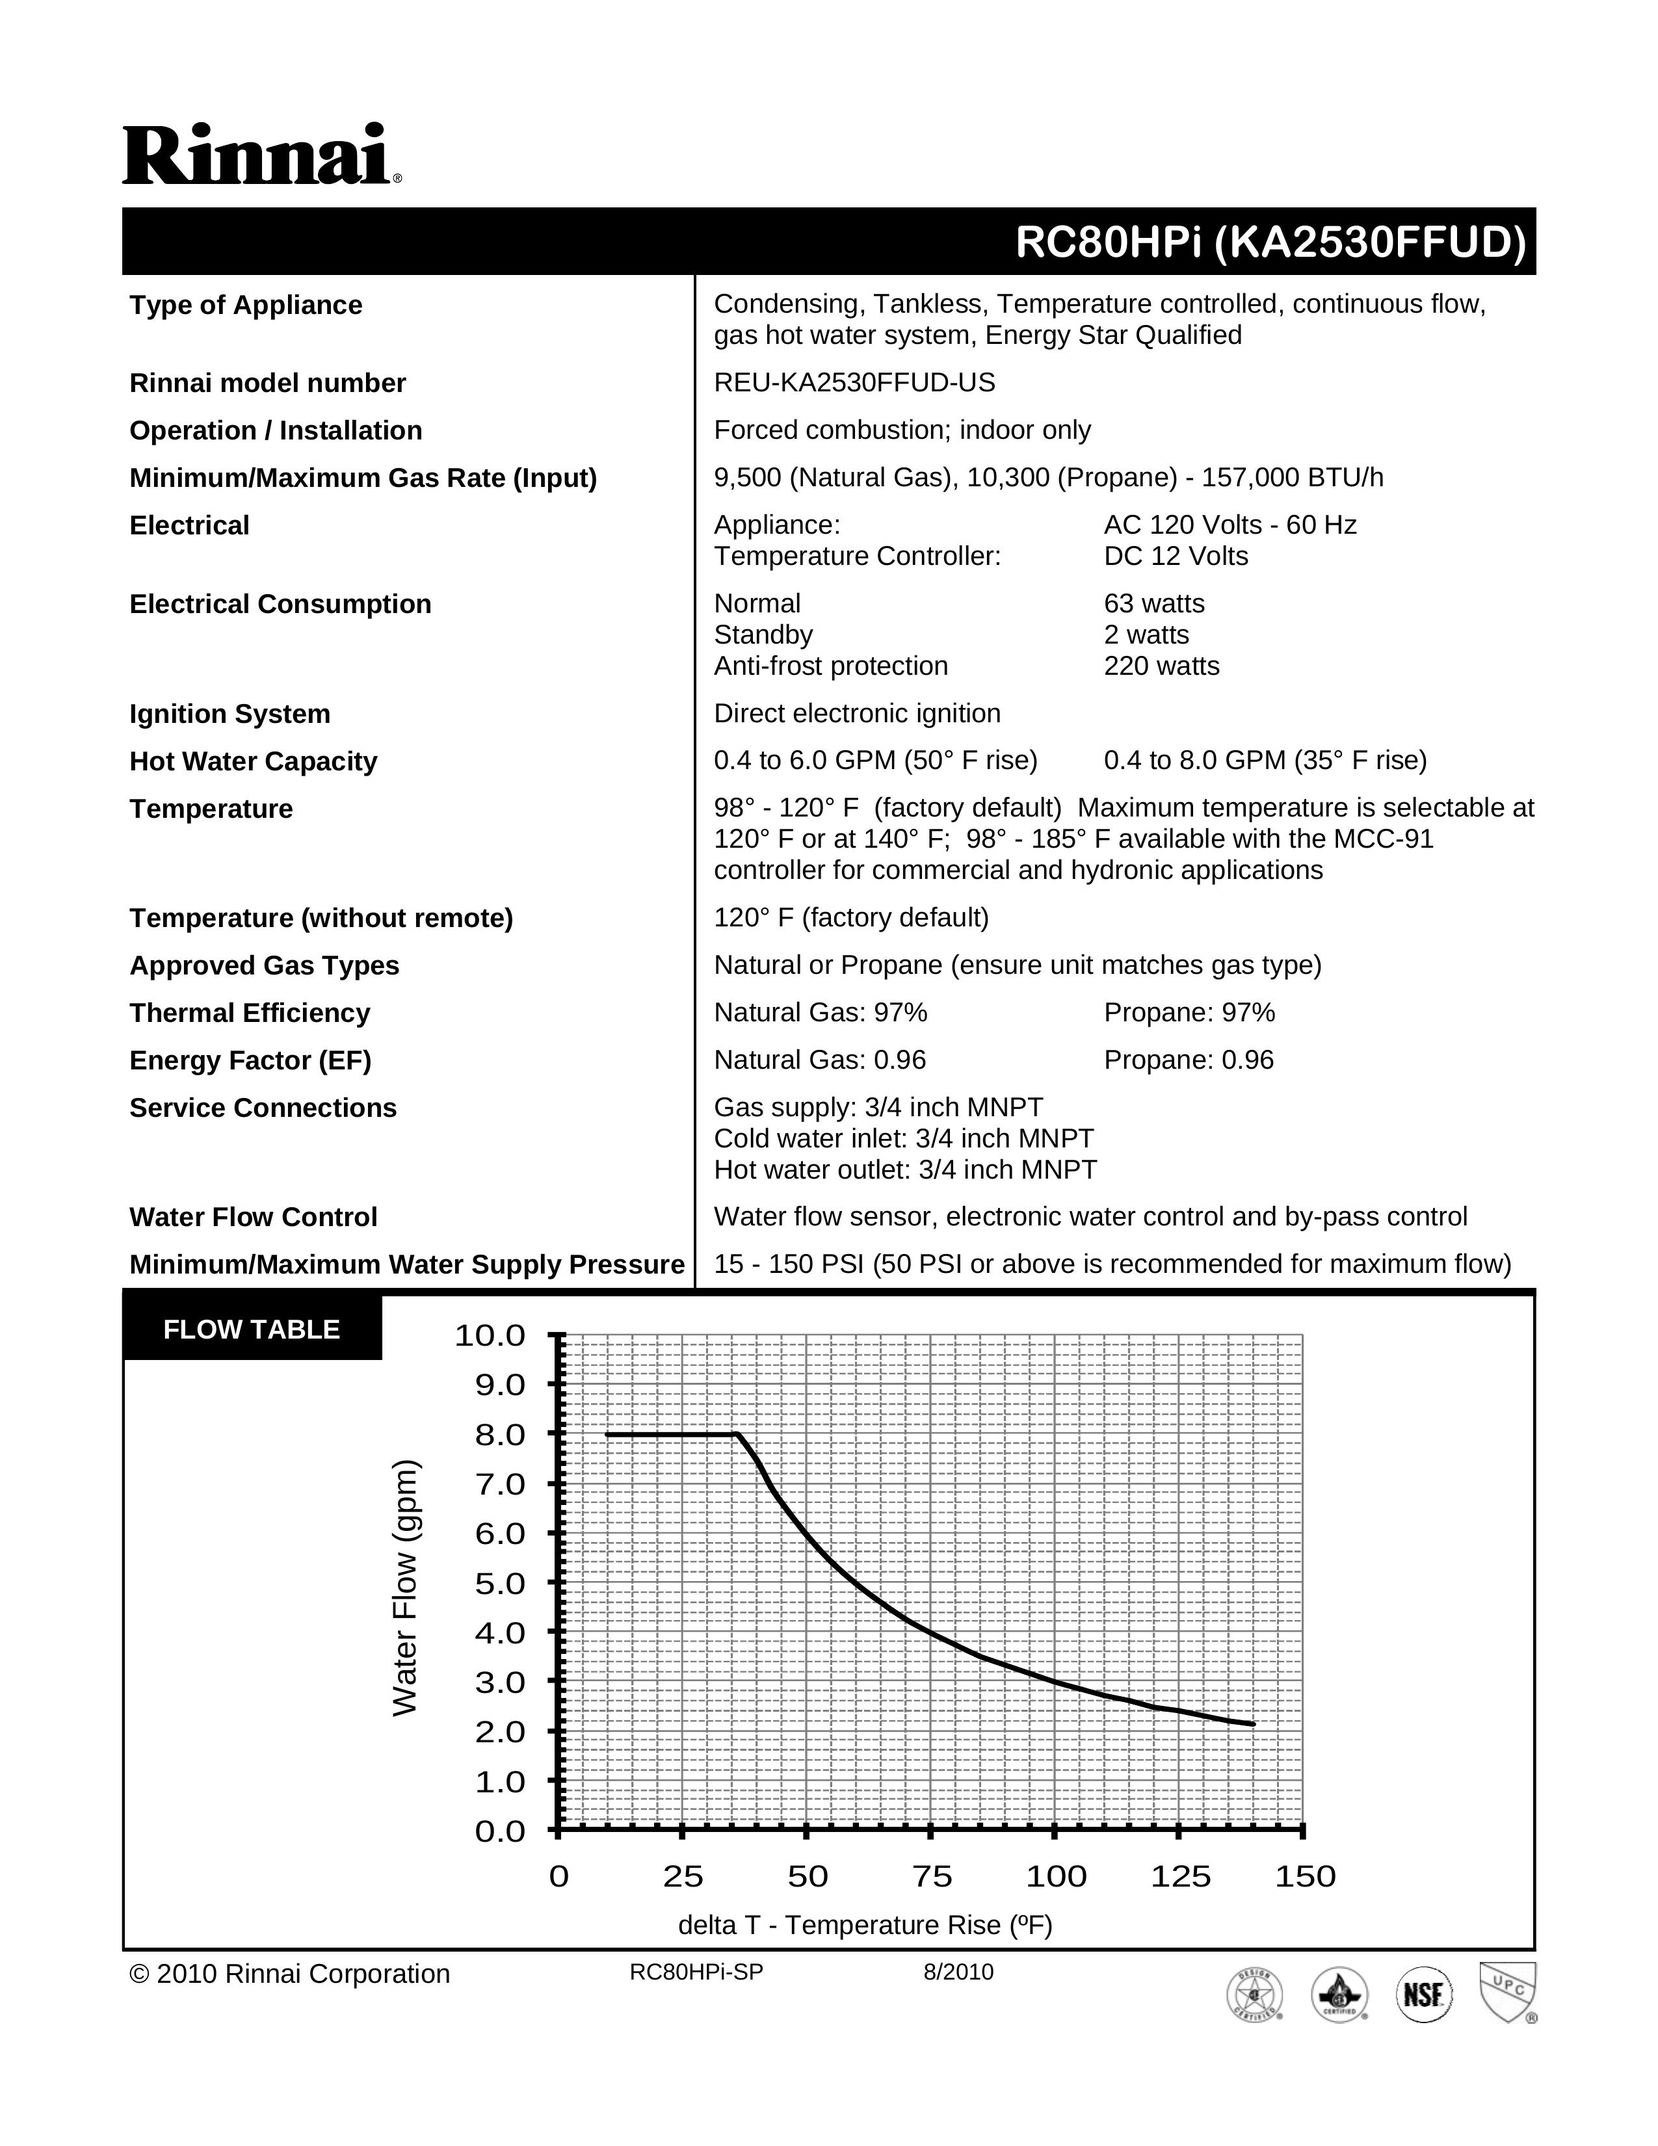 Rinnai REU-KA2530FFUD-US Water Heater User Manual